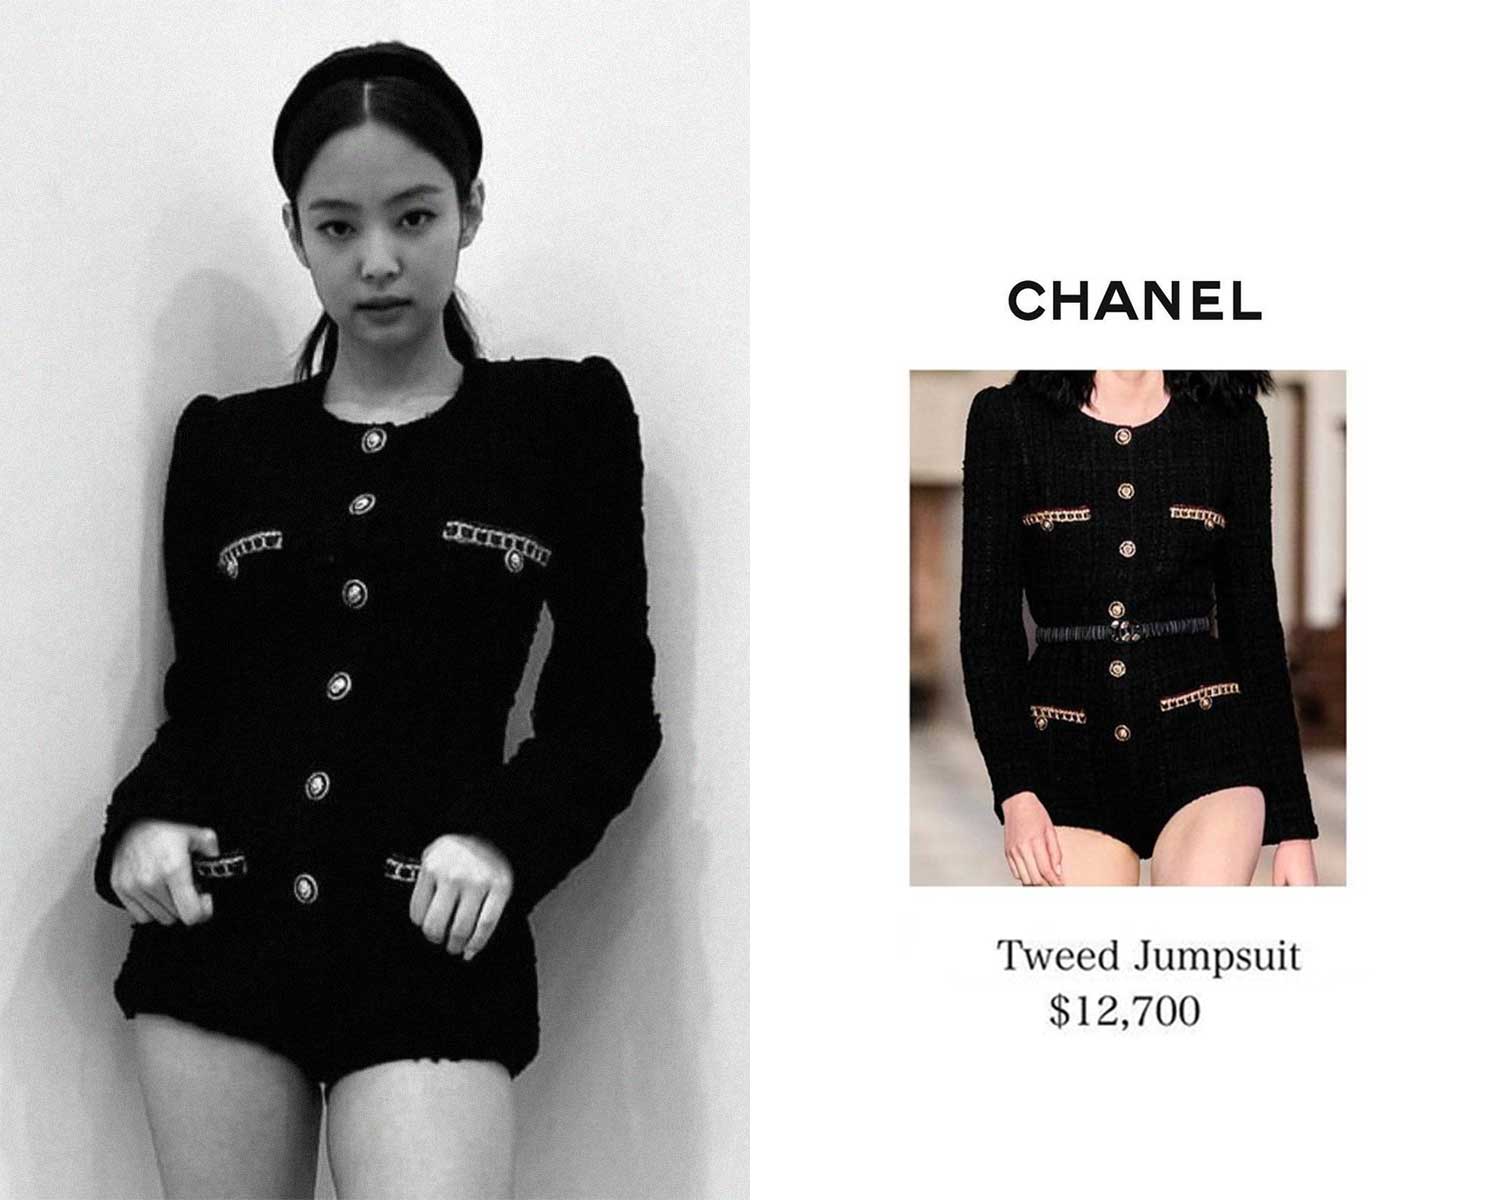 Jennie Kim Chanel Style Blackpink Fashion Outfit tweed jumpsuit